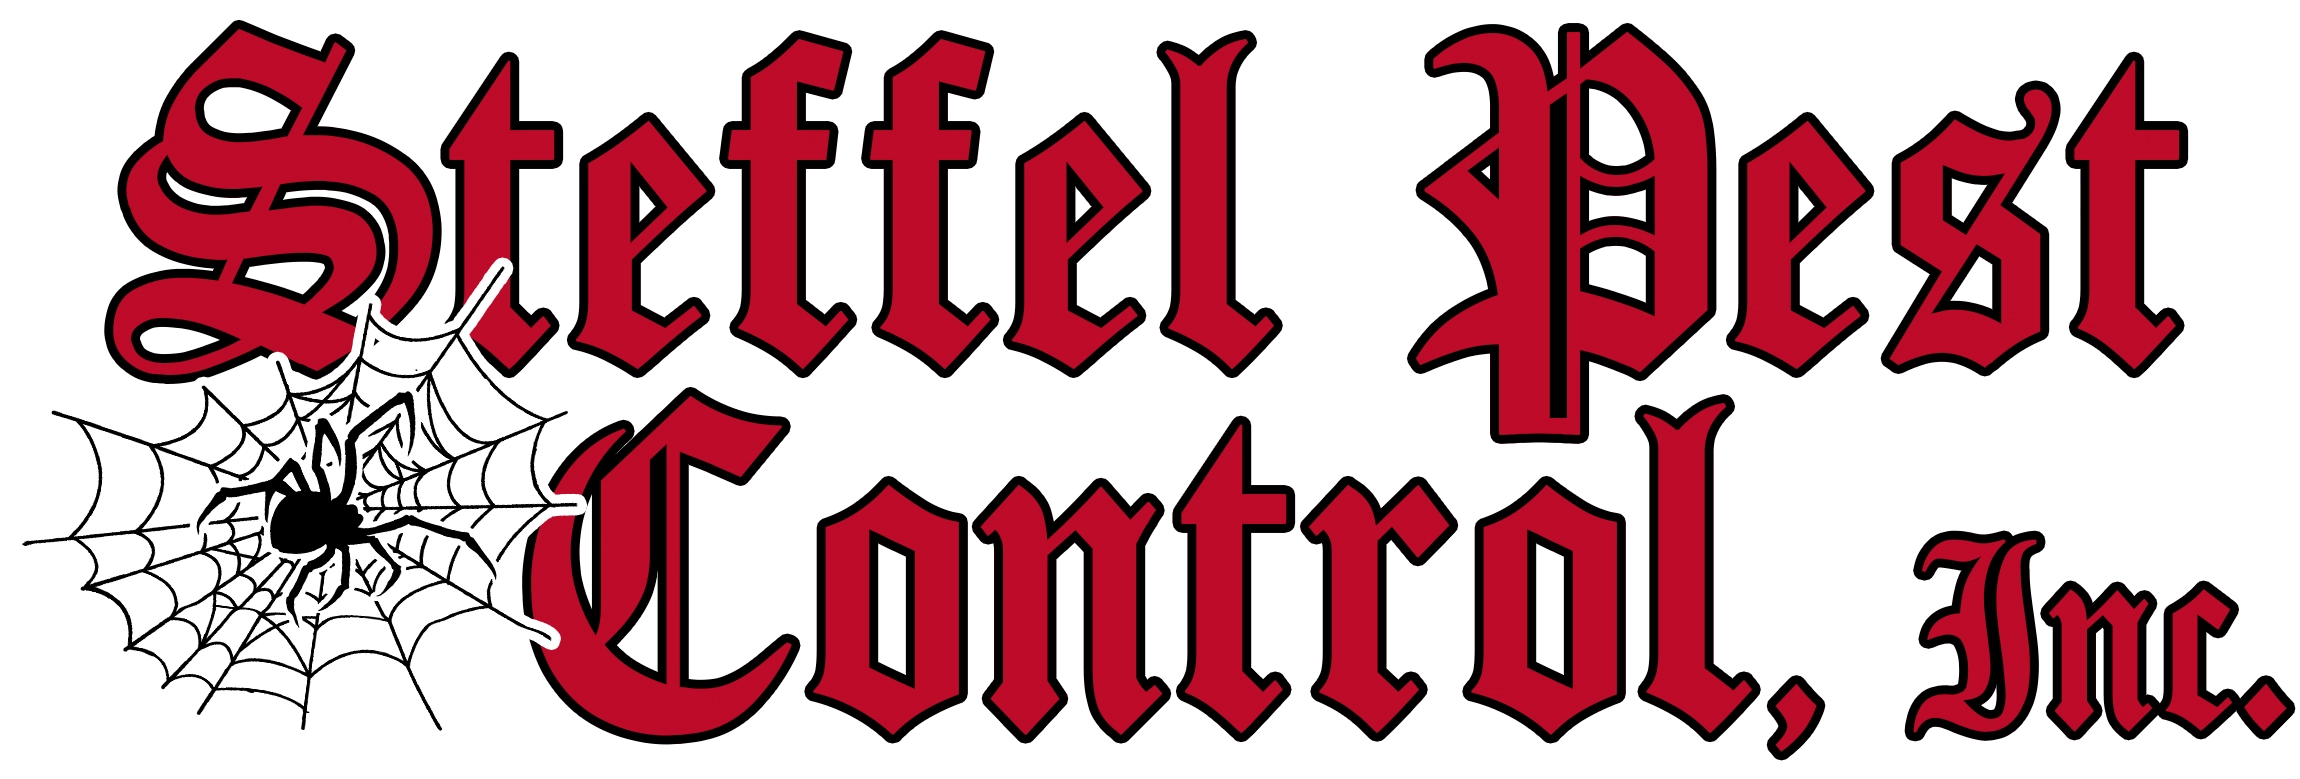 Steffel Pest Control Logo